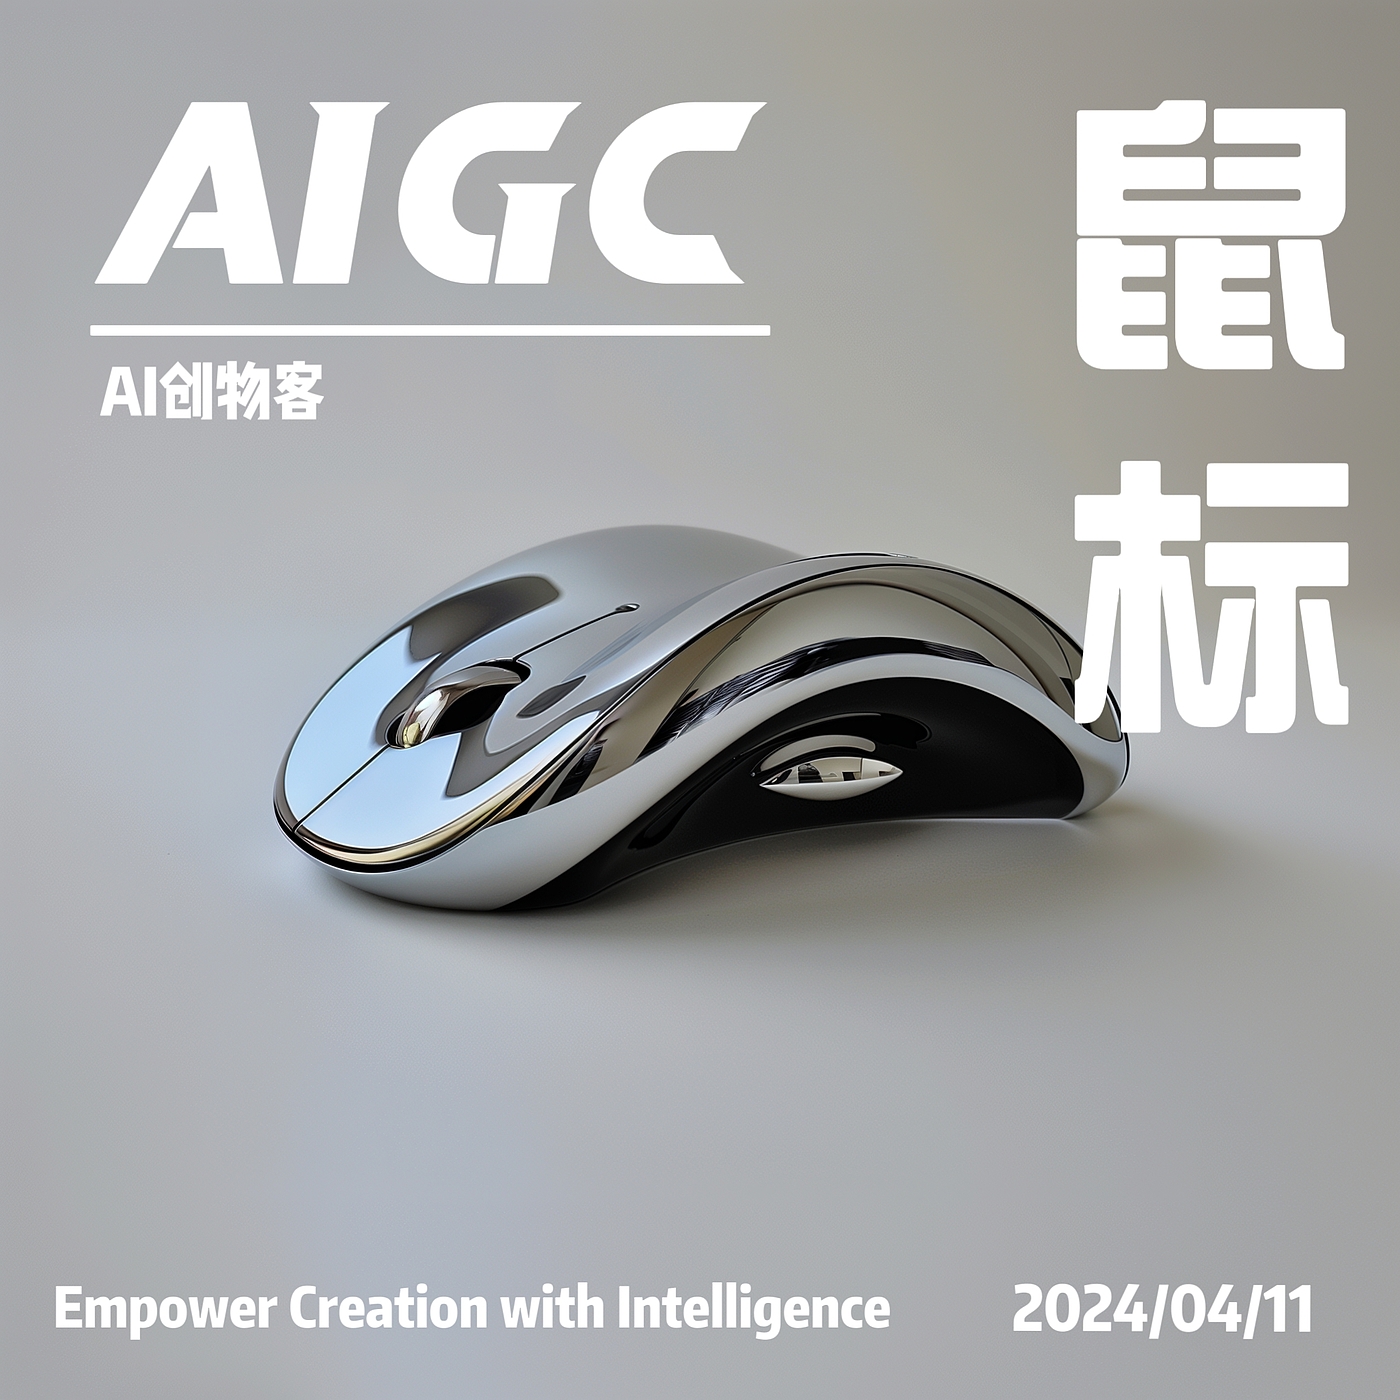 AIGC，AI设计，工业设计，产品设计，数码产品，鼠标，